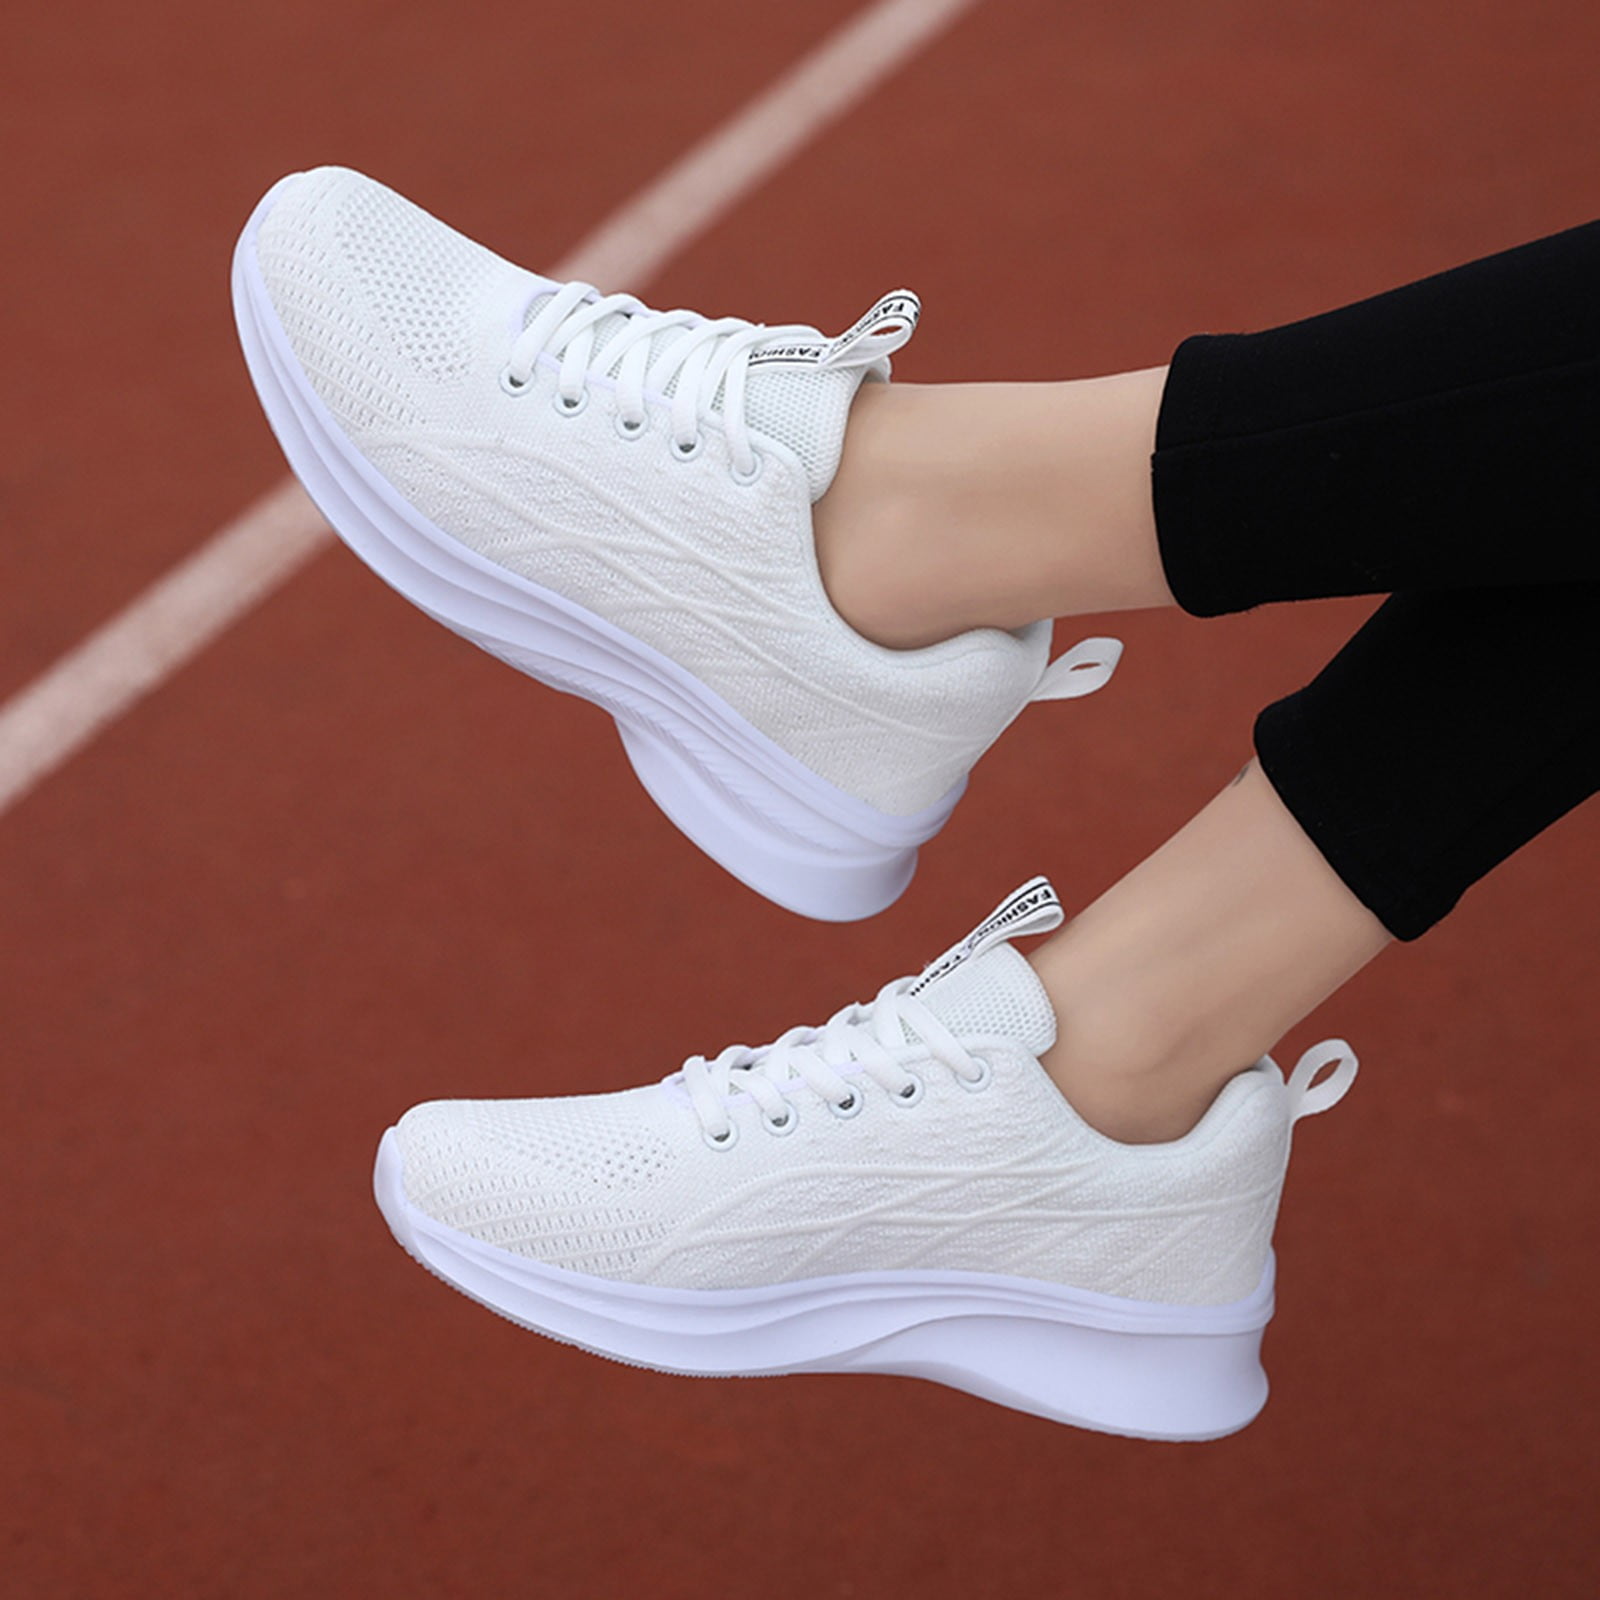 HSMQHJWE White Platform Women's Running Shoes Walking Tennis Ladies Work  Casual Comfor Lightweight NonSlip Gym Trainers 